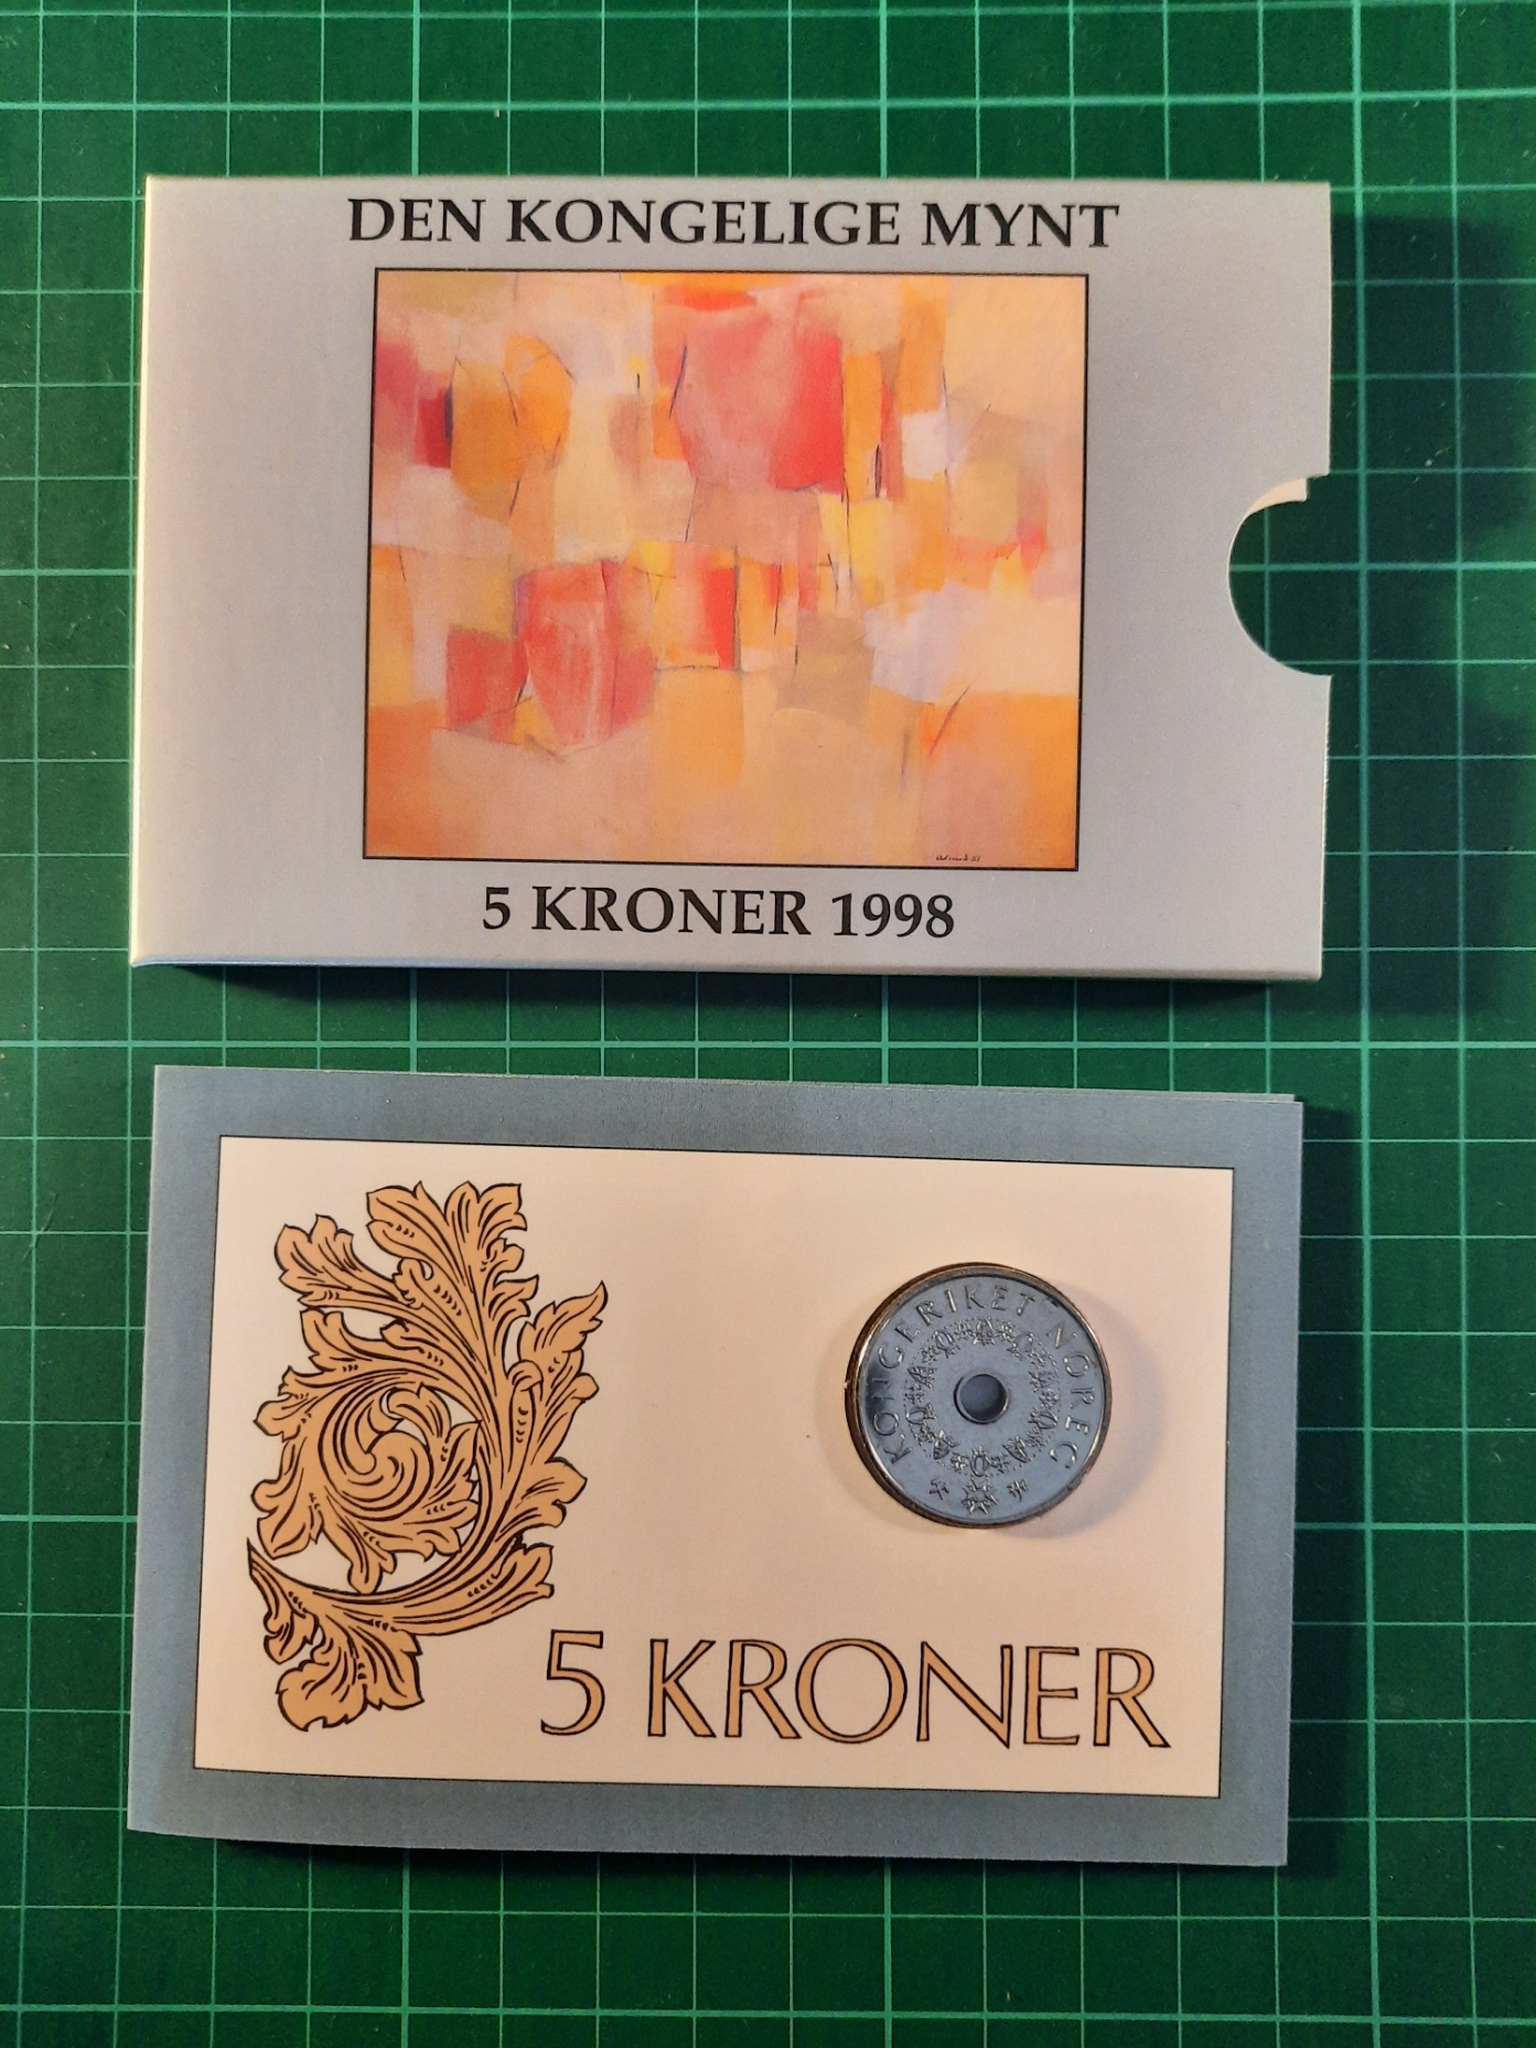 5 Krone 1998 (Ny fem krone)